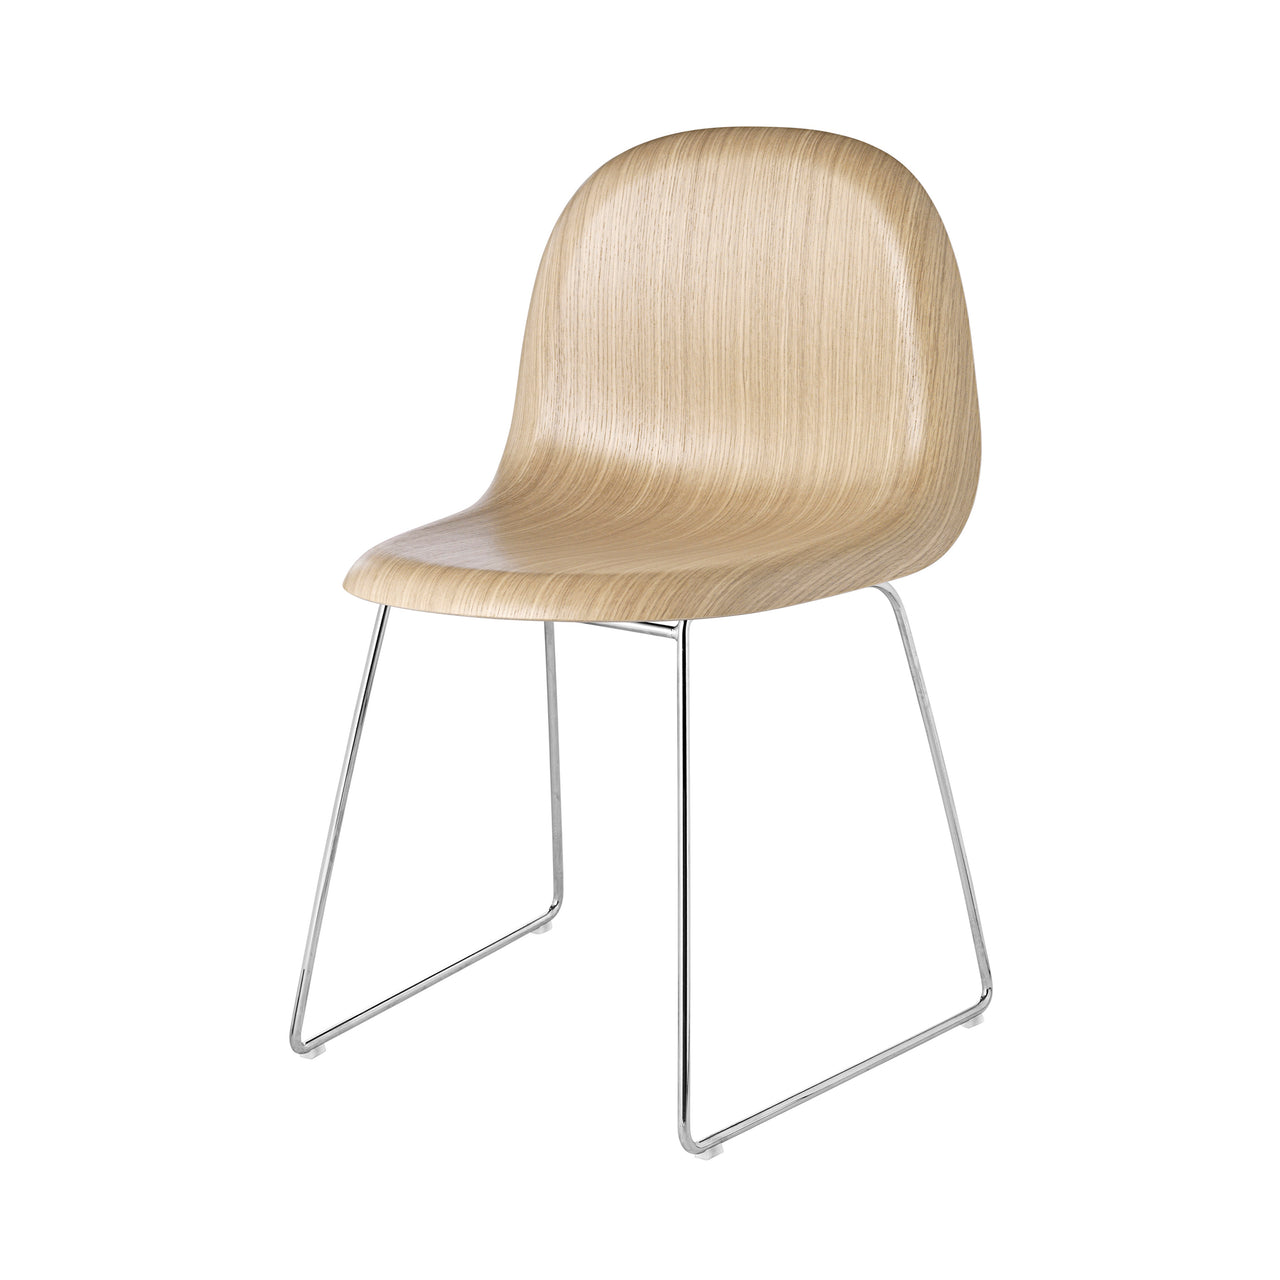 3D Dining Chair: Stacking Sledge Base + Oak + Chrome